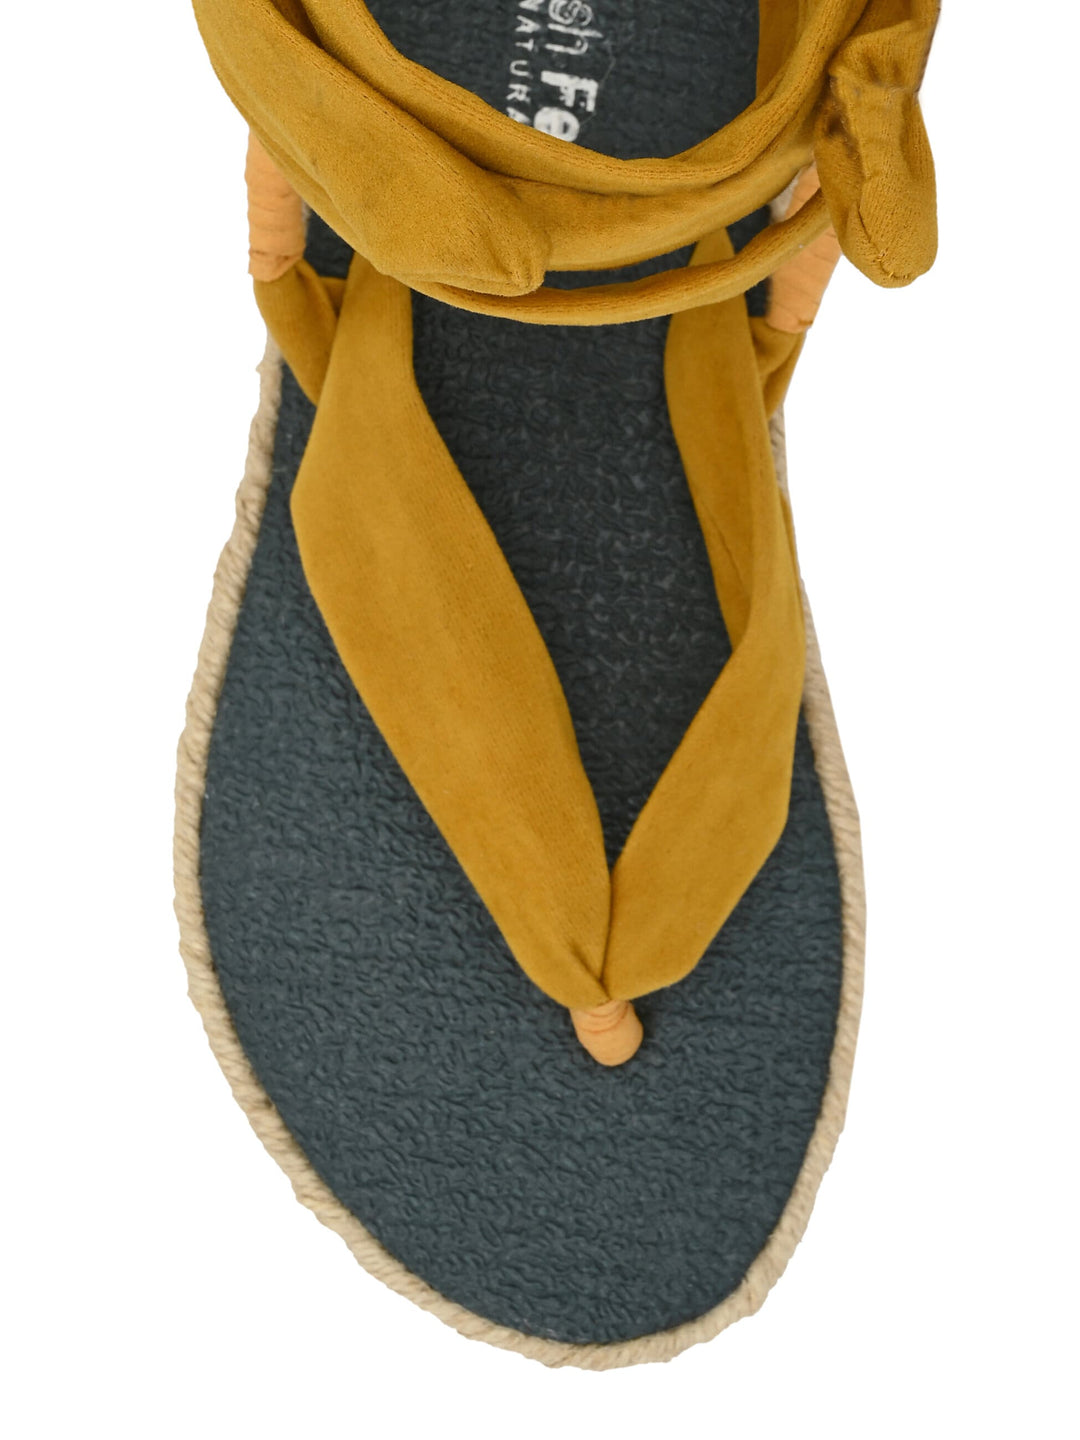 Saina Yellow Yoga Mat Sandals for Women